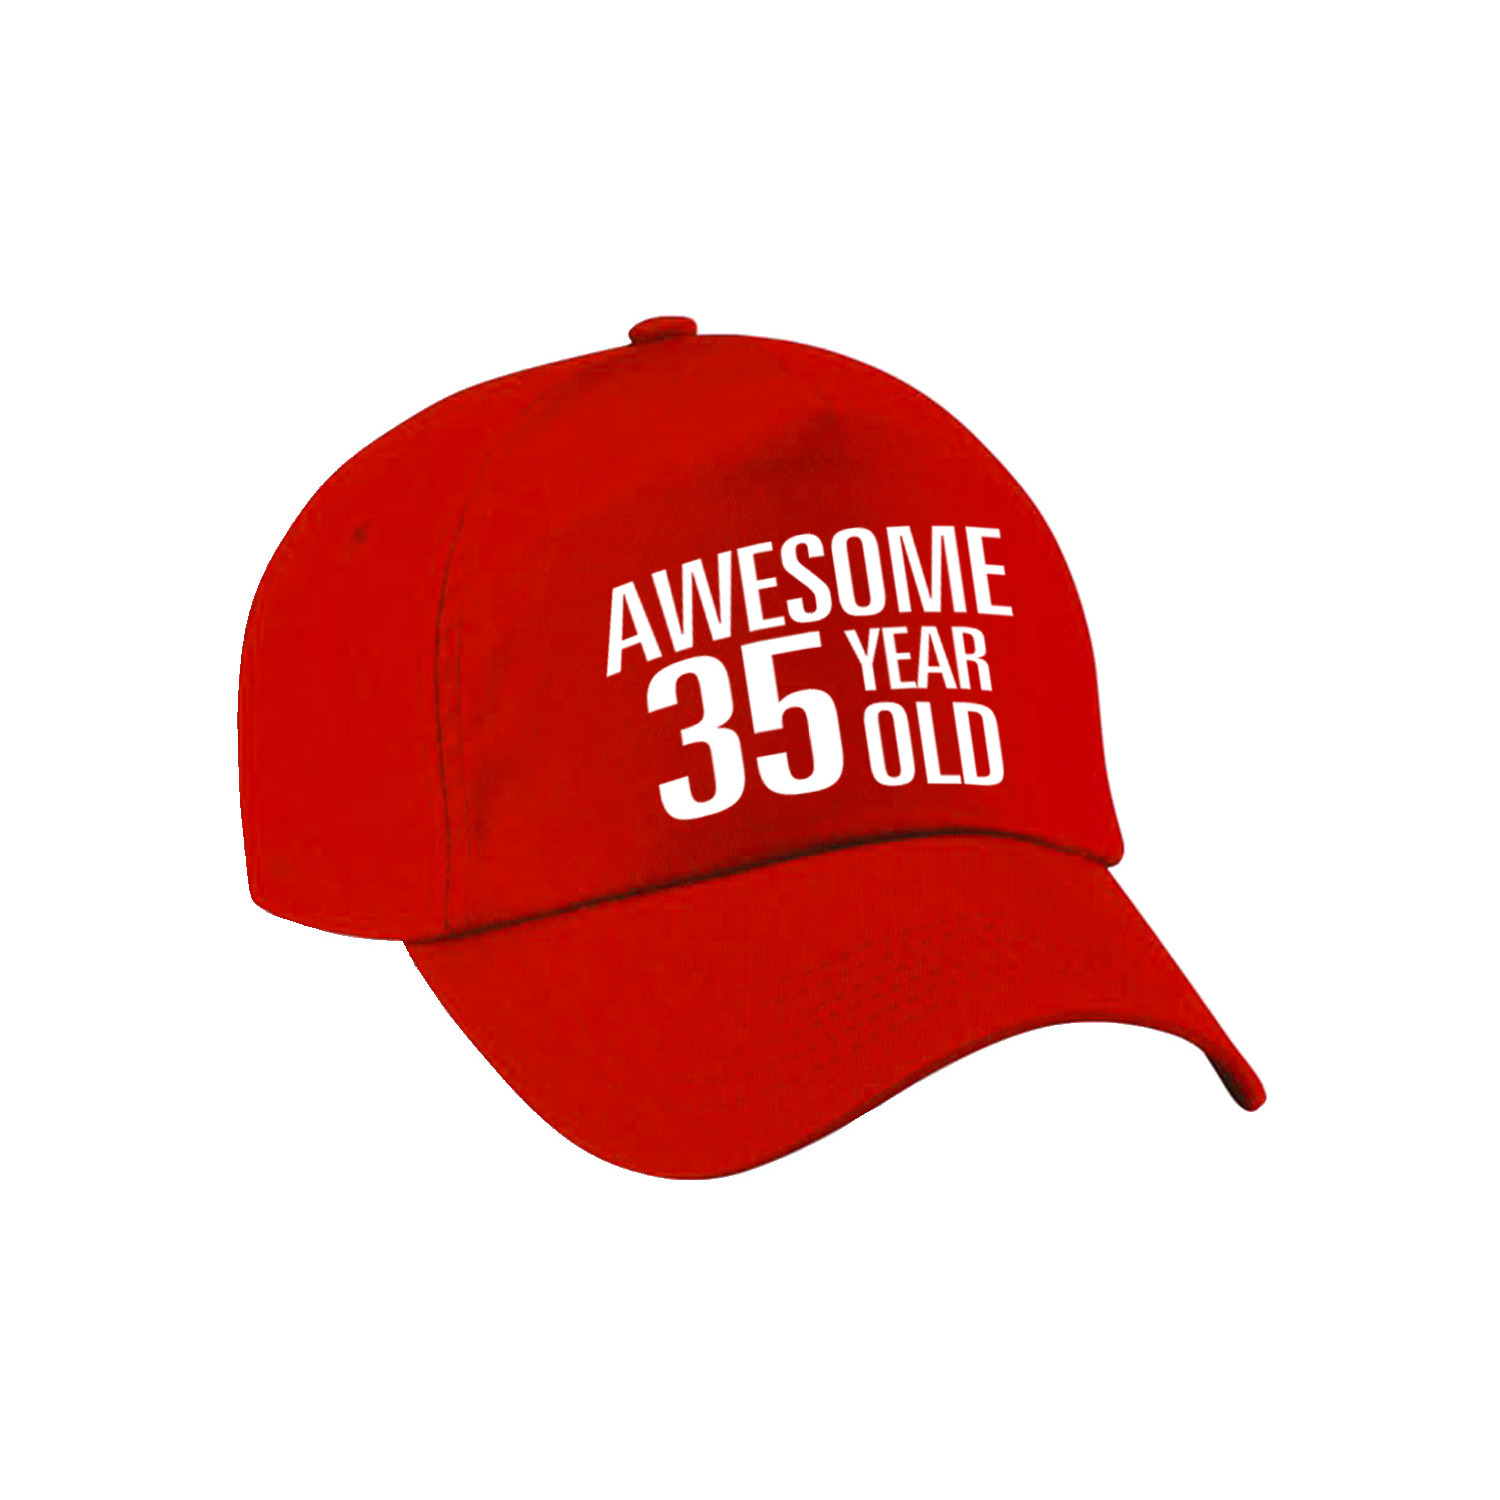 Awesome 35 year old verjaardag pet - cap rood voor dames en heren